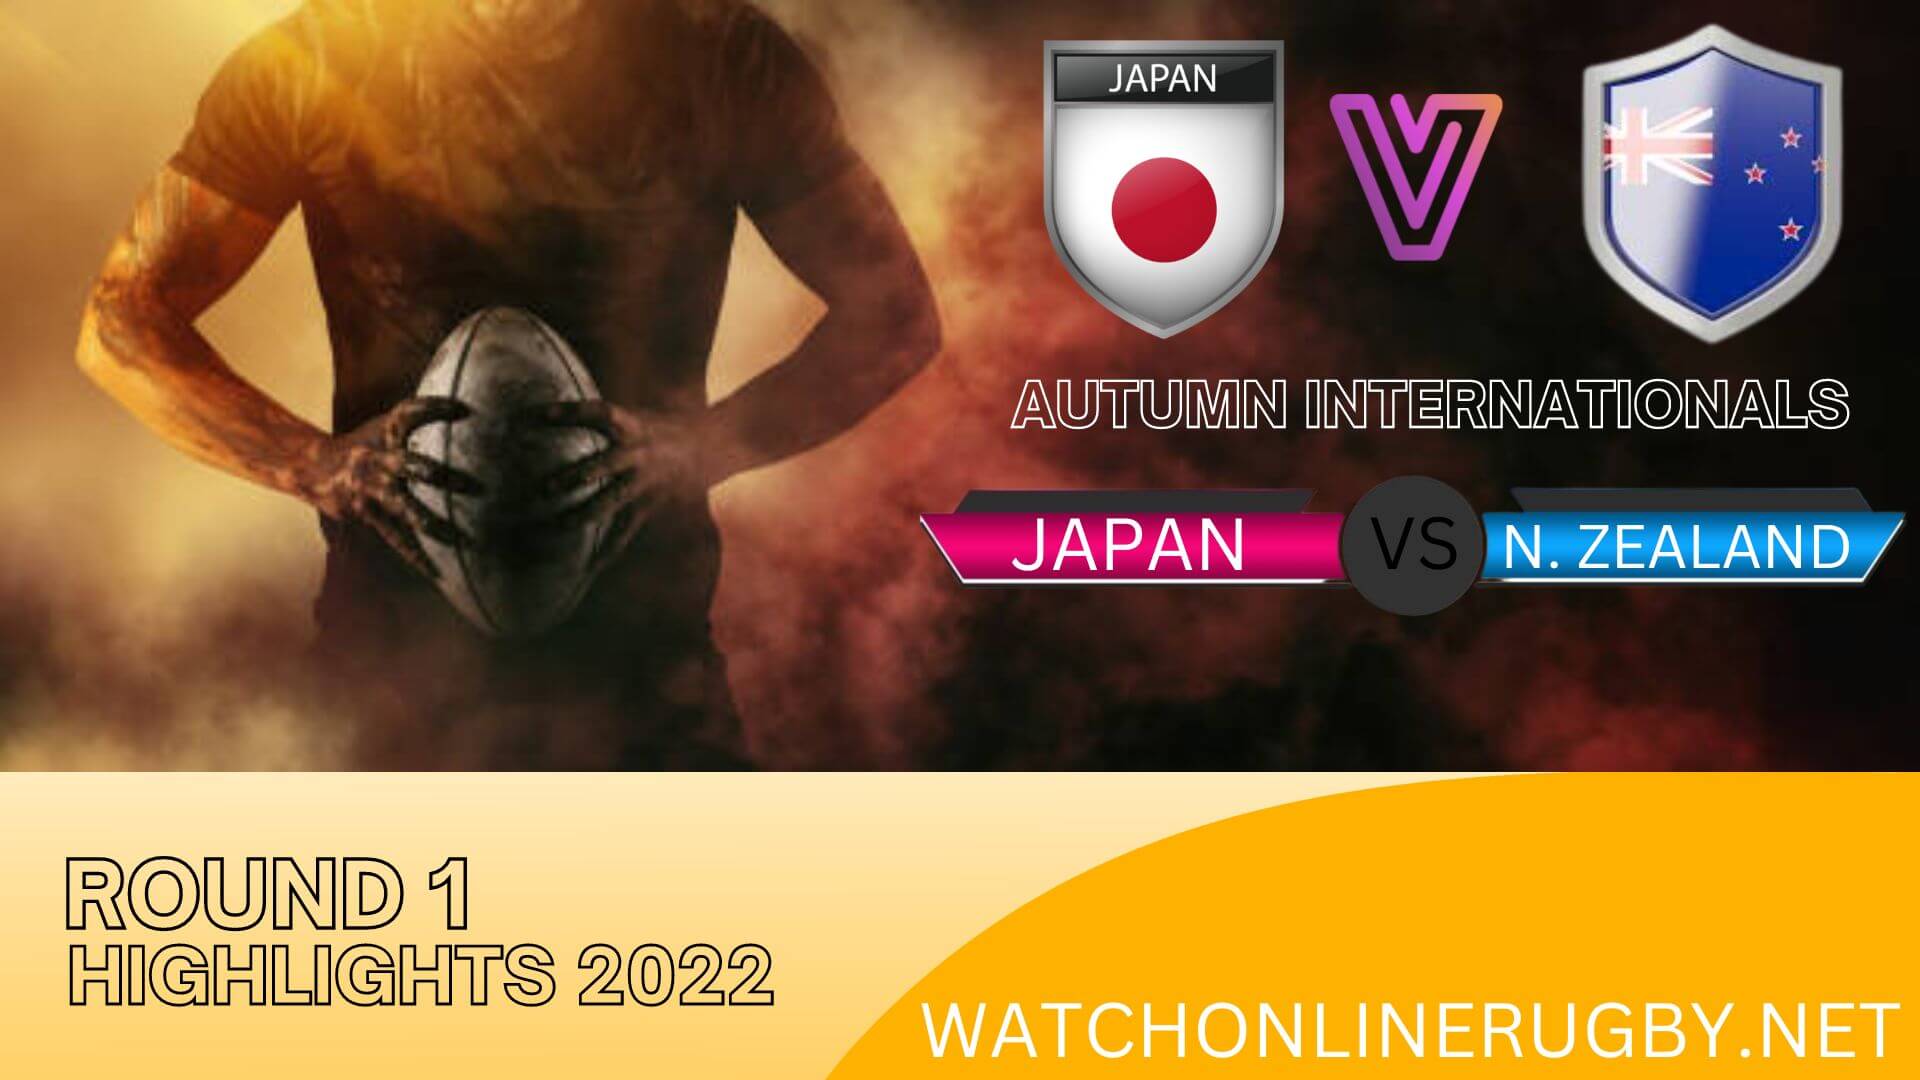 Japan Vs New Zealand Autumn Internationals 2022 RD 1